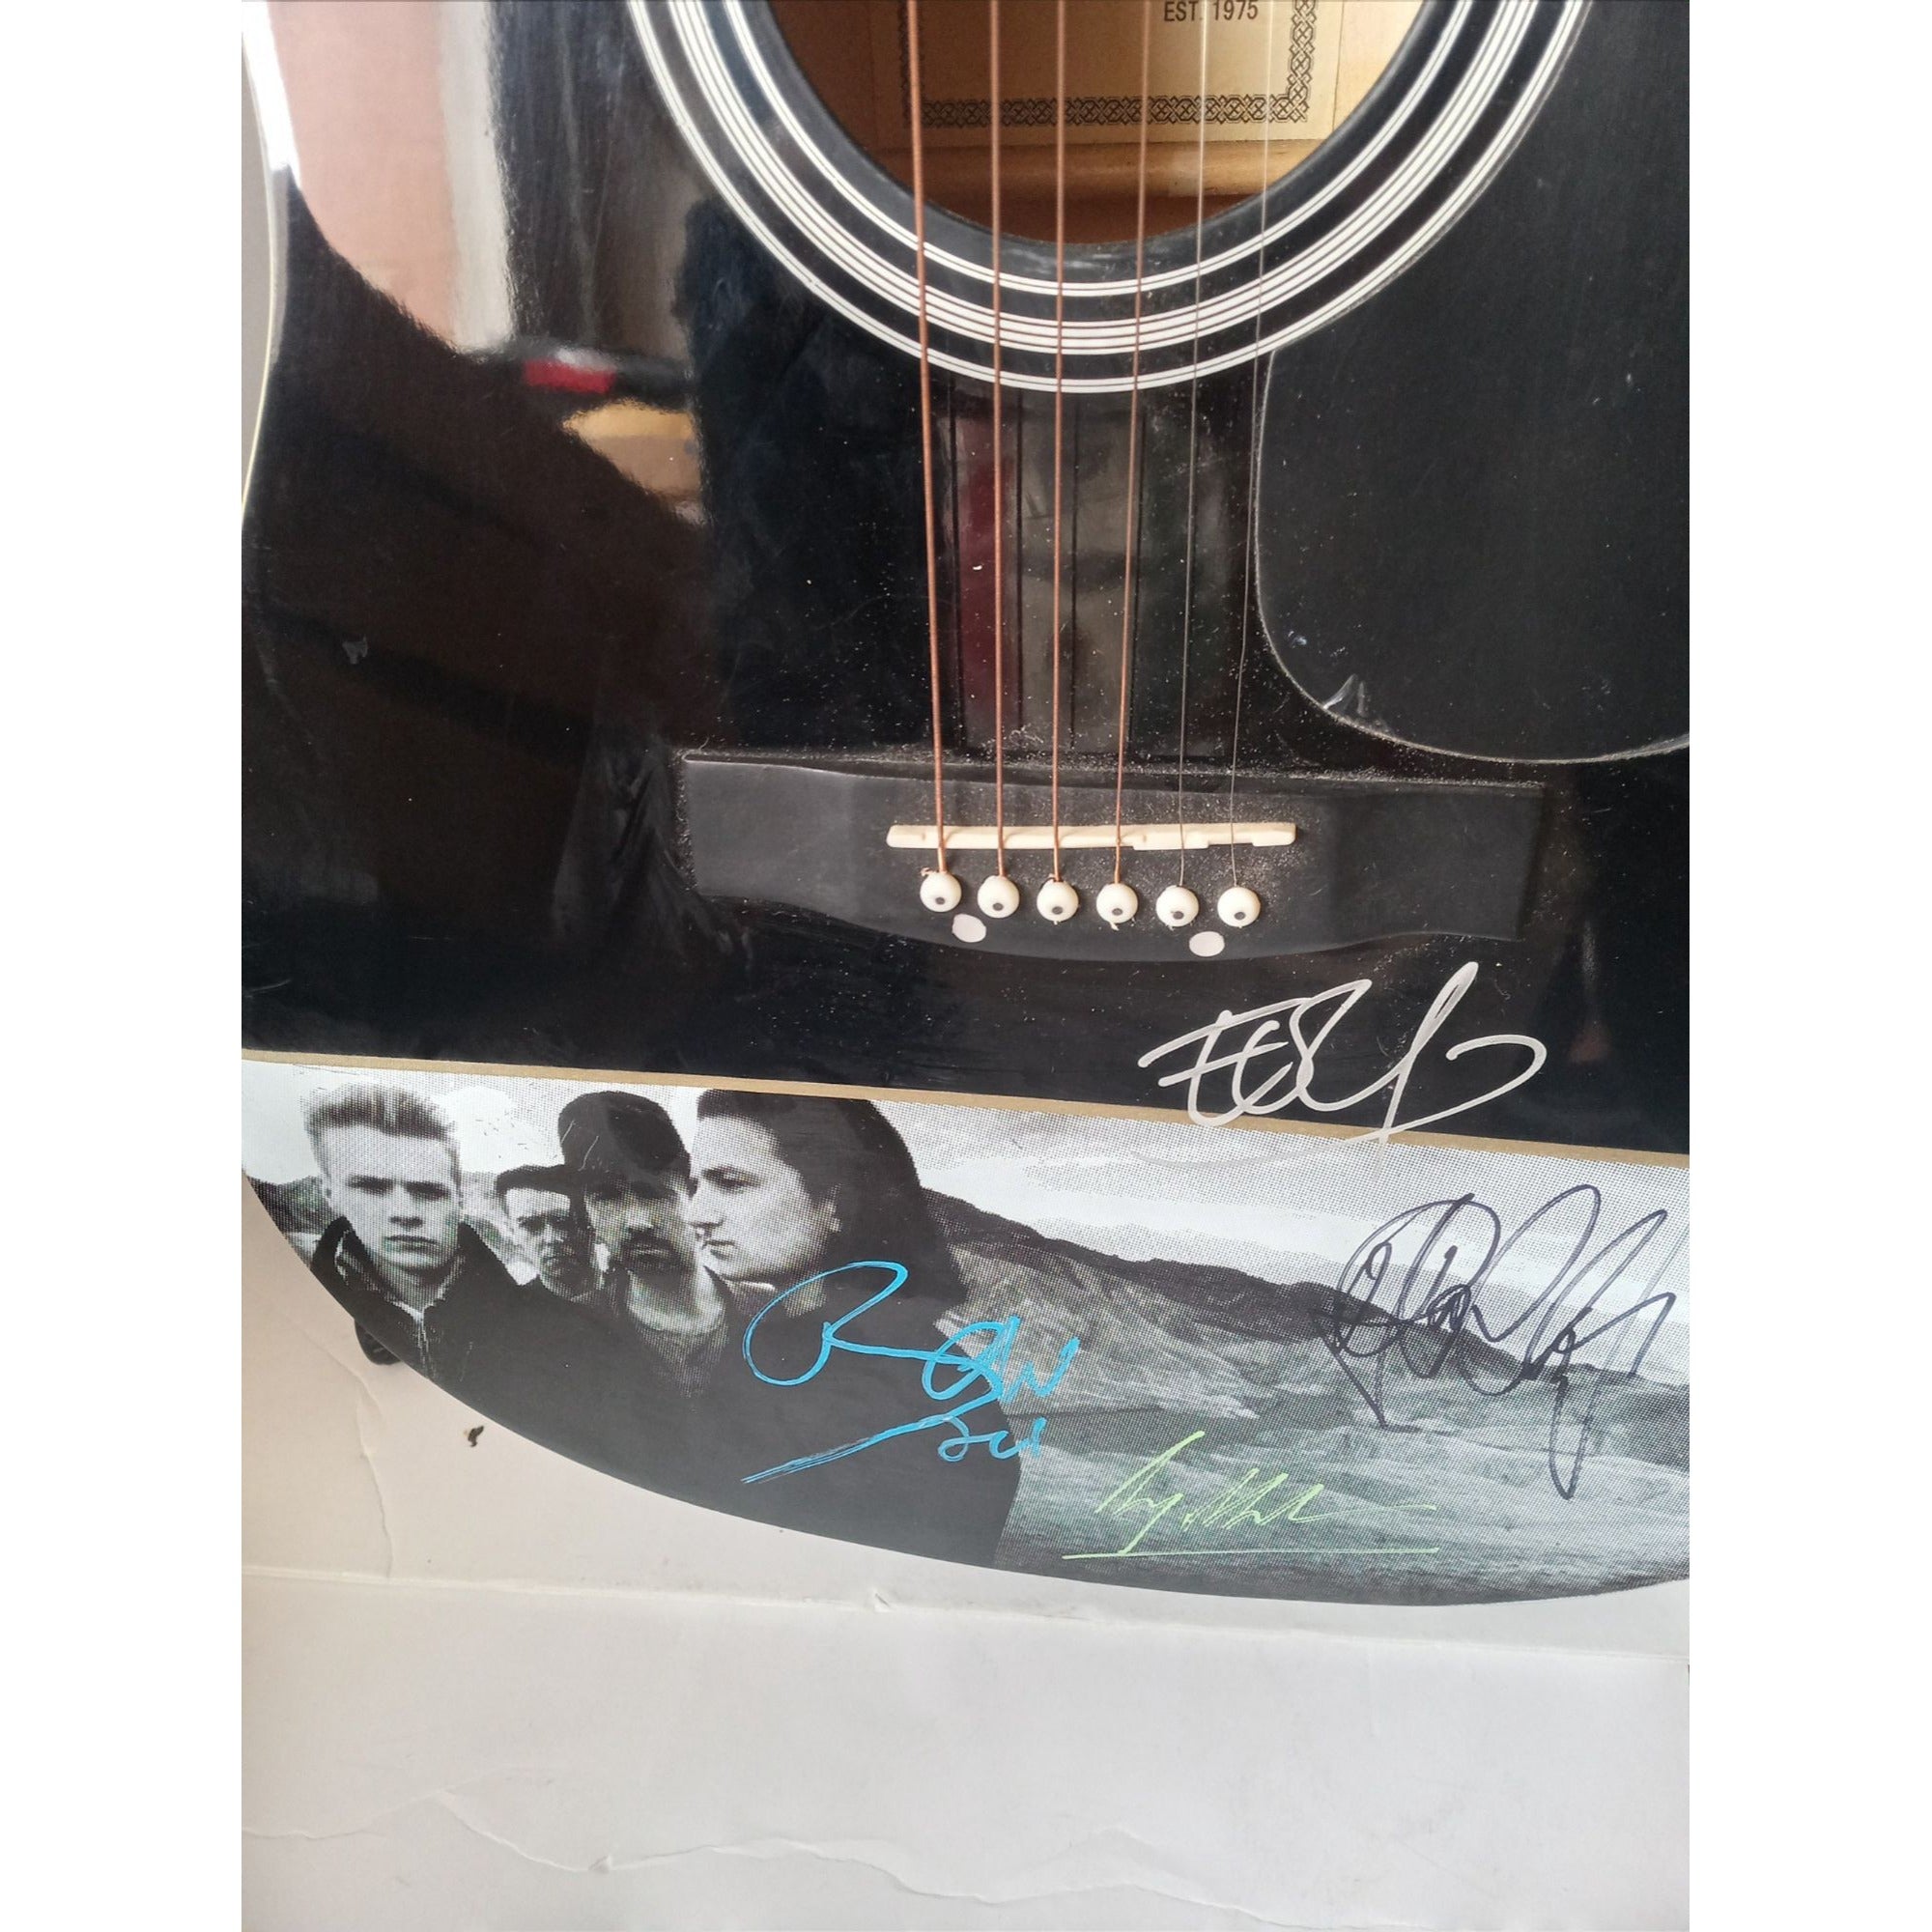 U2 Paul Hewson "Bono", The Edge, Adam Clayton, Larry Mullen signed guitar with proof